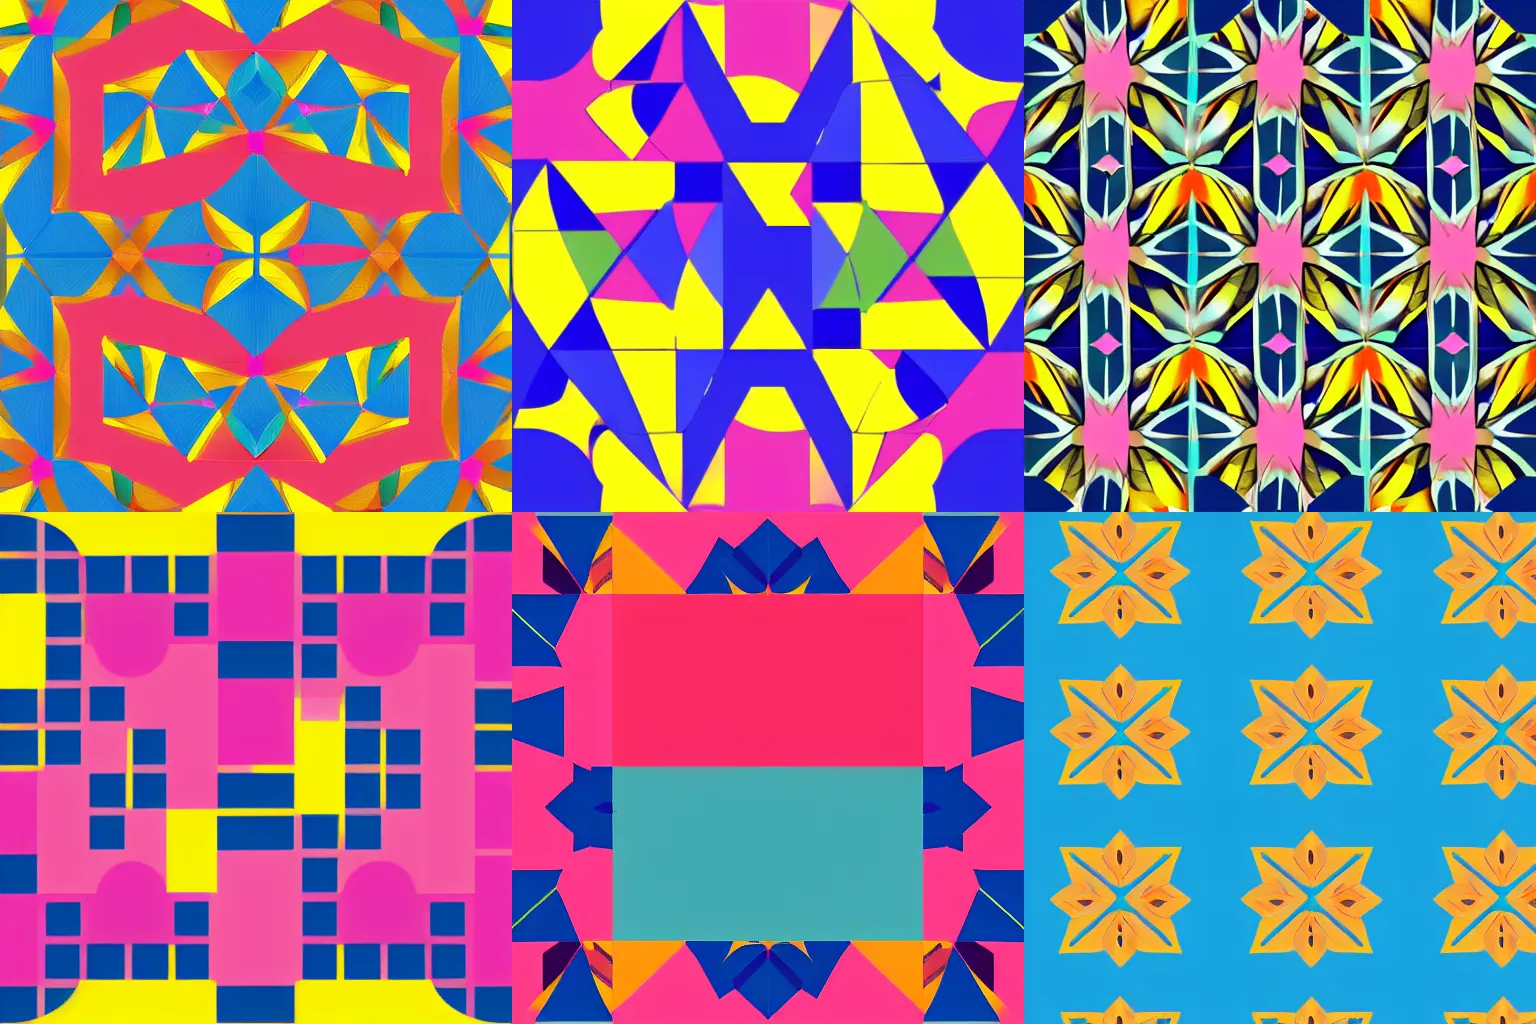 Prompt: geometric pattern using the blue square emoji, yellow circle emoji, leaves emoji and pink flower emoji